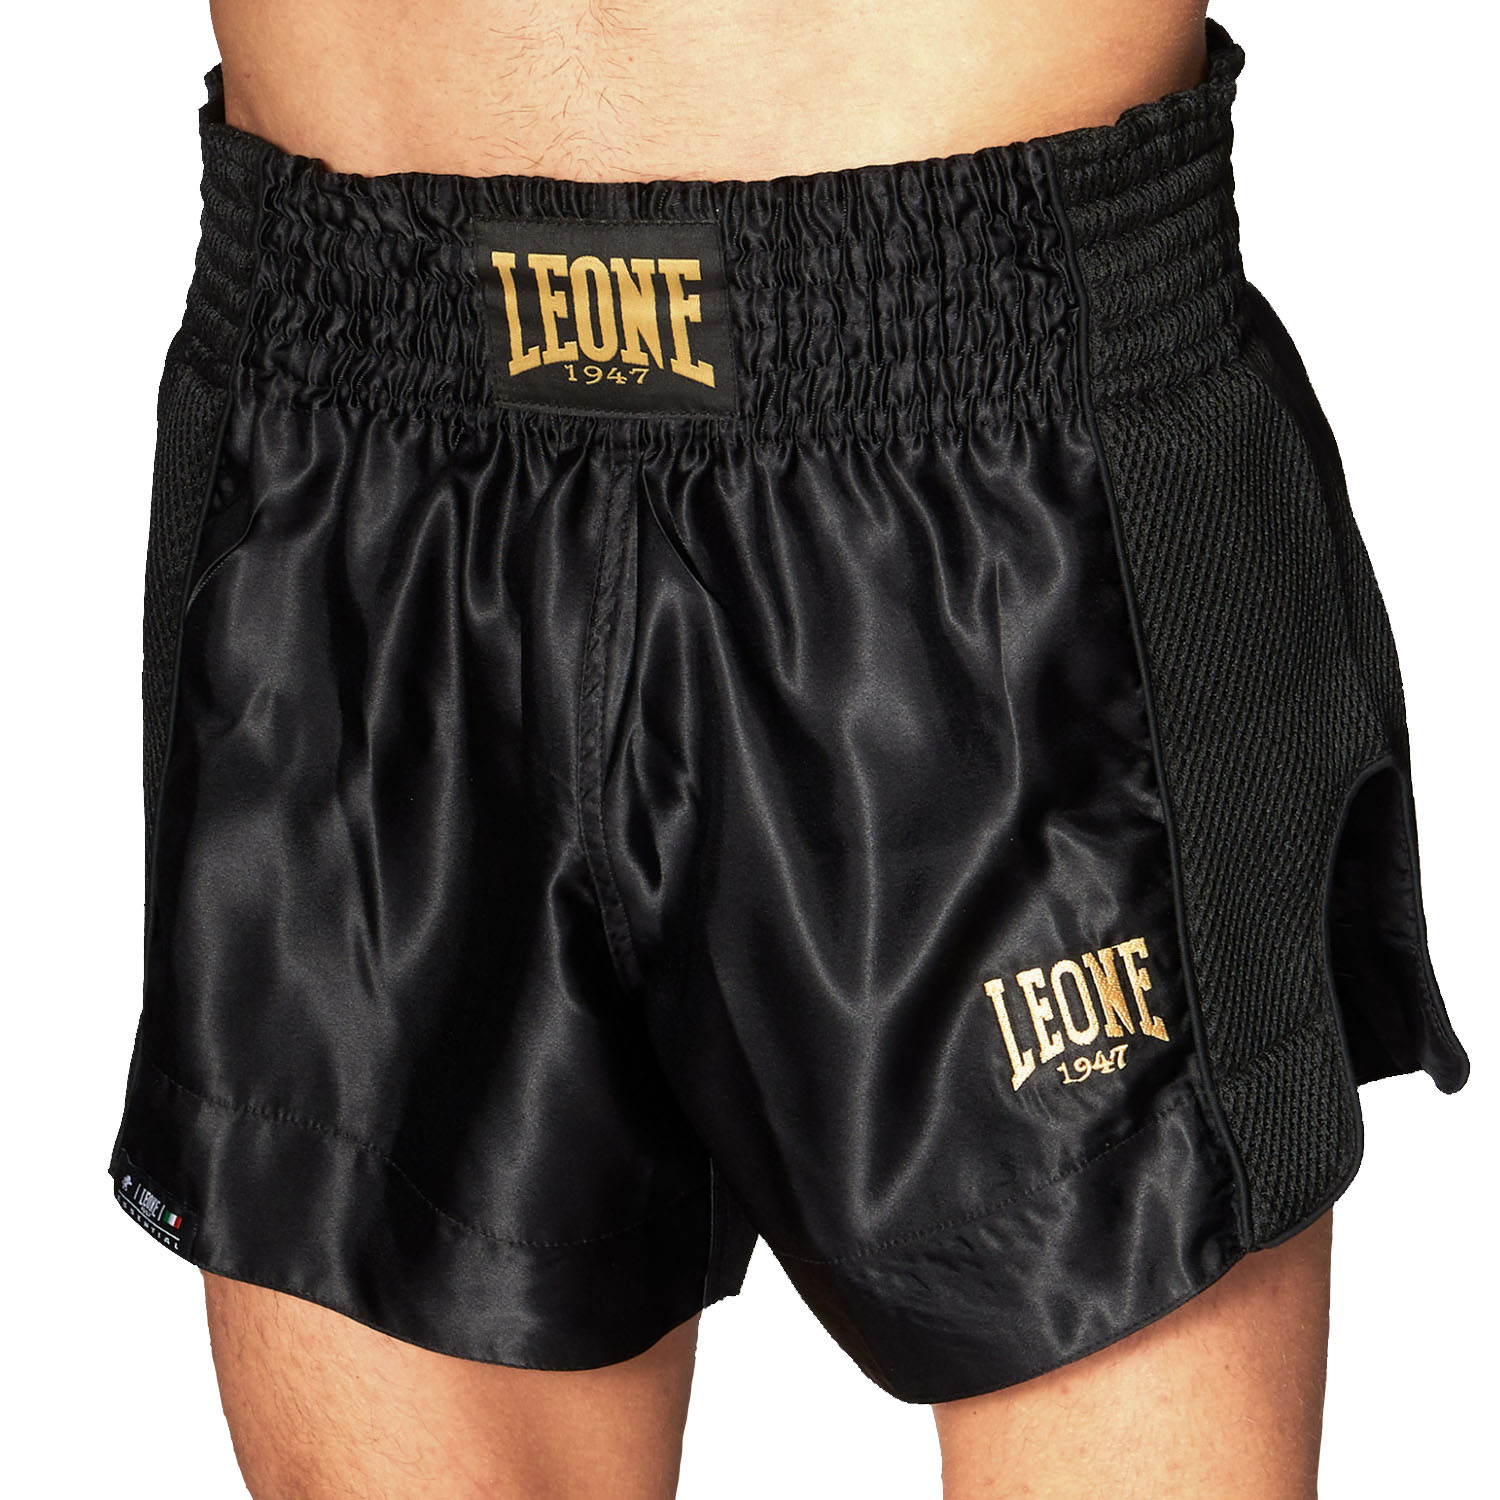 LEONE Muay Thai Shorts, Essential, ABE20, schwarz